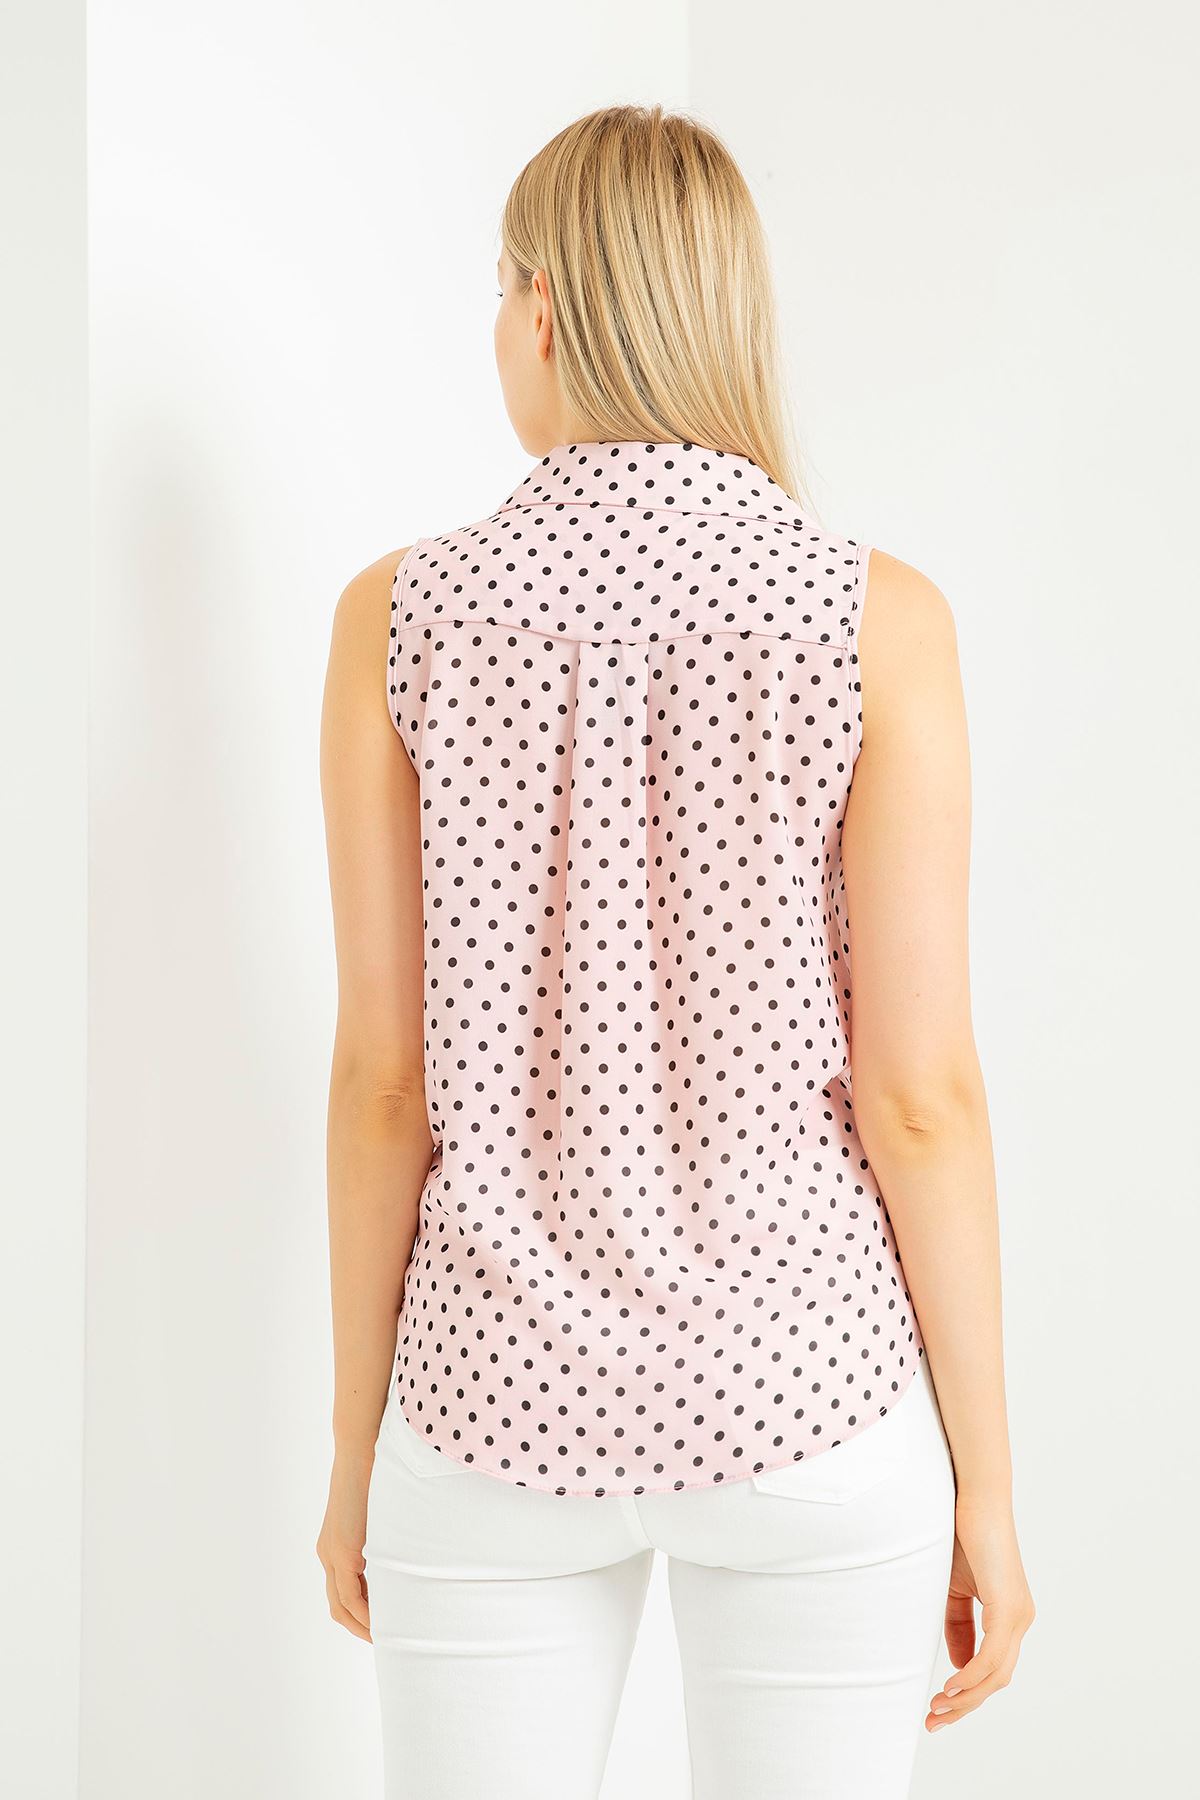 Jessica Fabric Armless Shirt Collar Polka Dot Auger Blouse - Light Pink